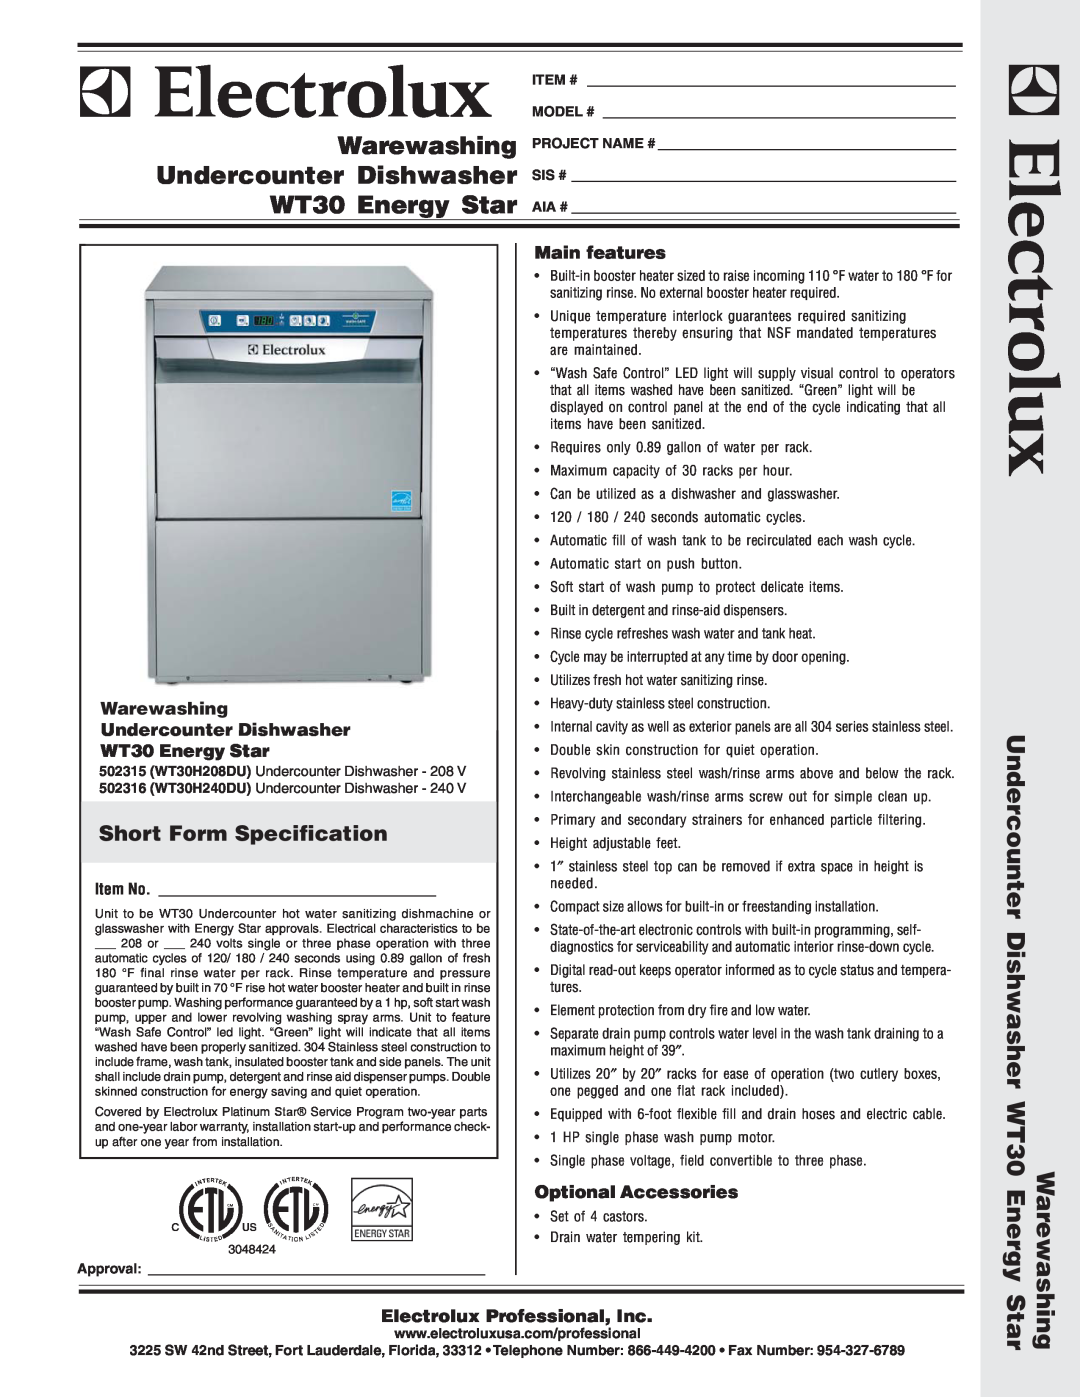 Electrolux 502315 warranty Short Form Specification, Main features, Warewashing, Undercounter Dishwasher, WT30 Energy Star 